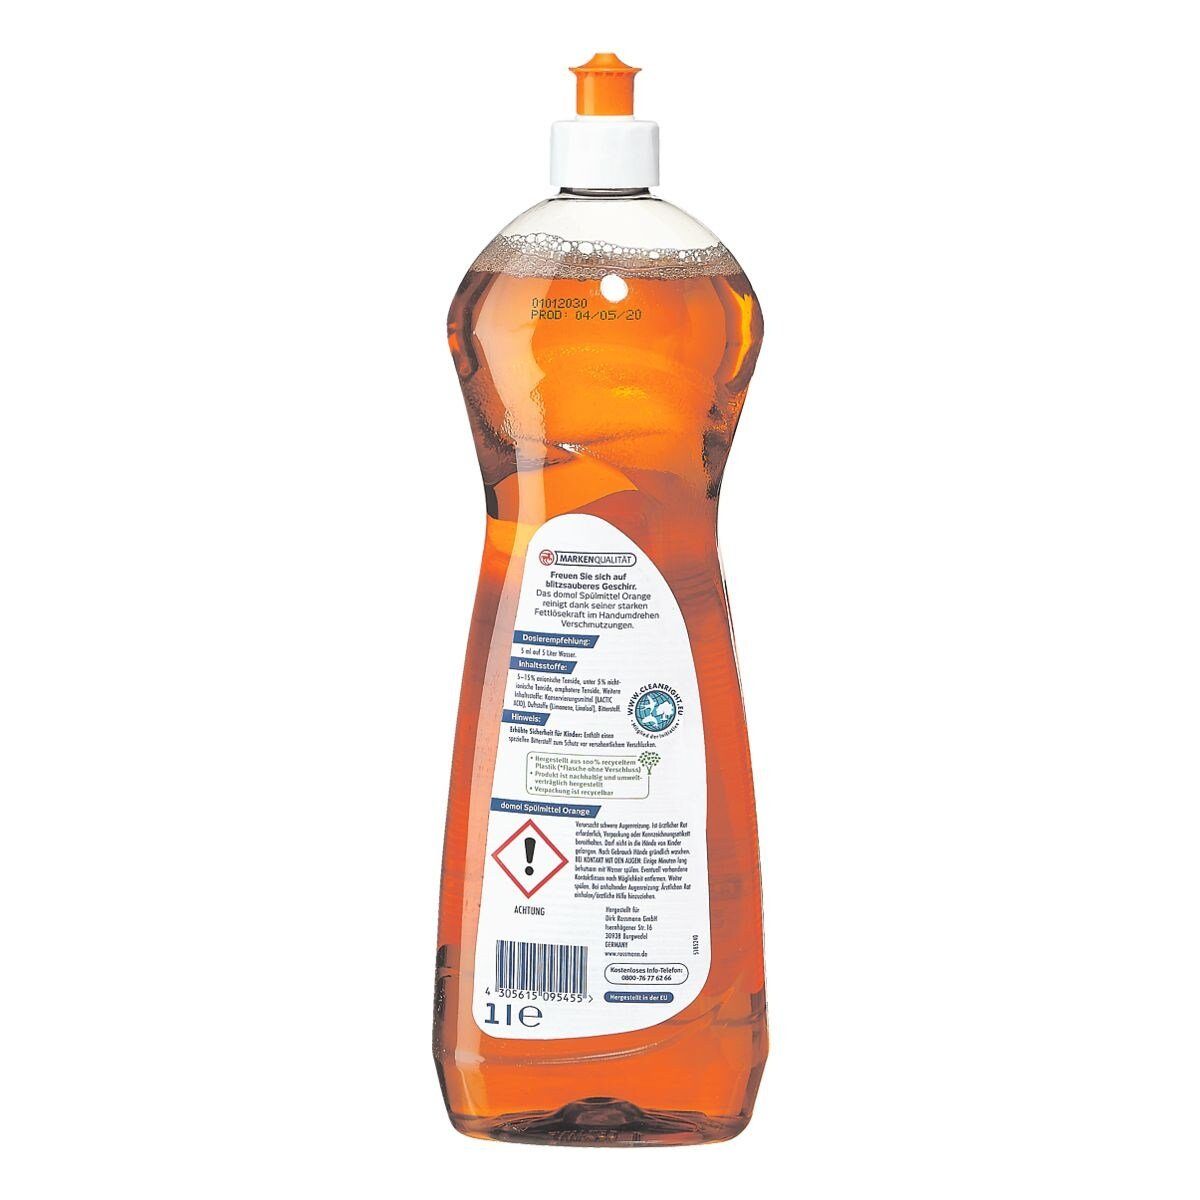 Orange (1 starke Domol Geschirrspülmittel Fettlösekraft) Liter,